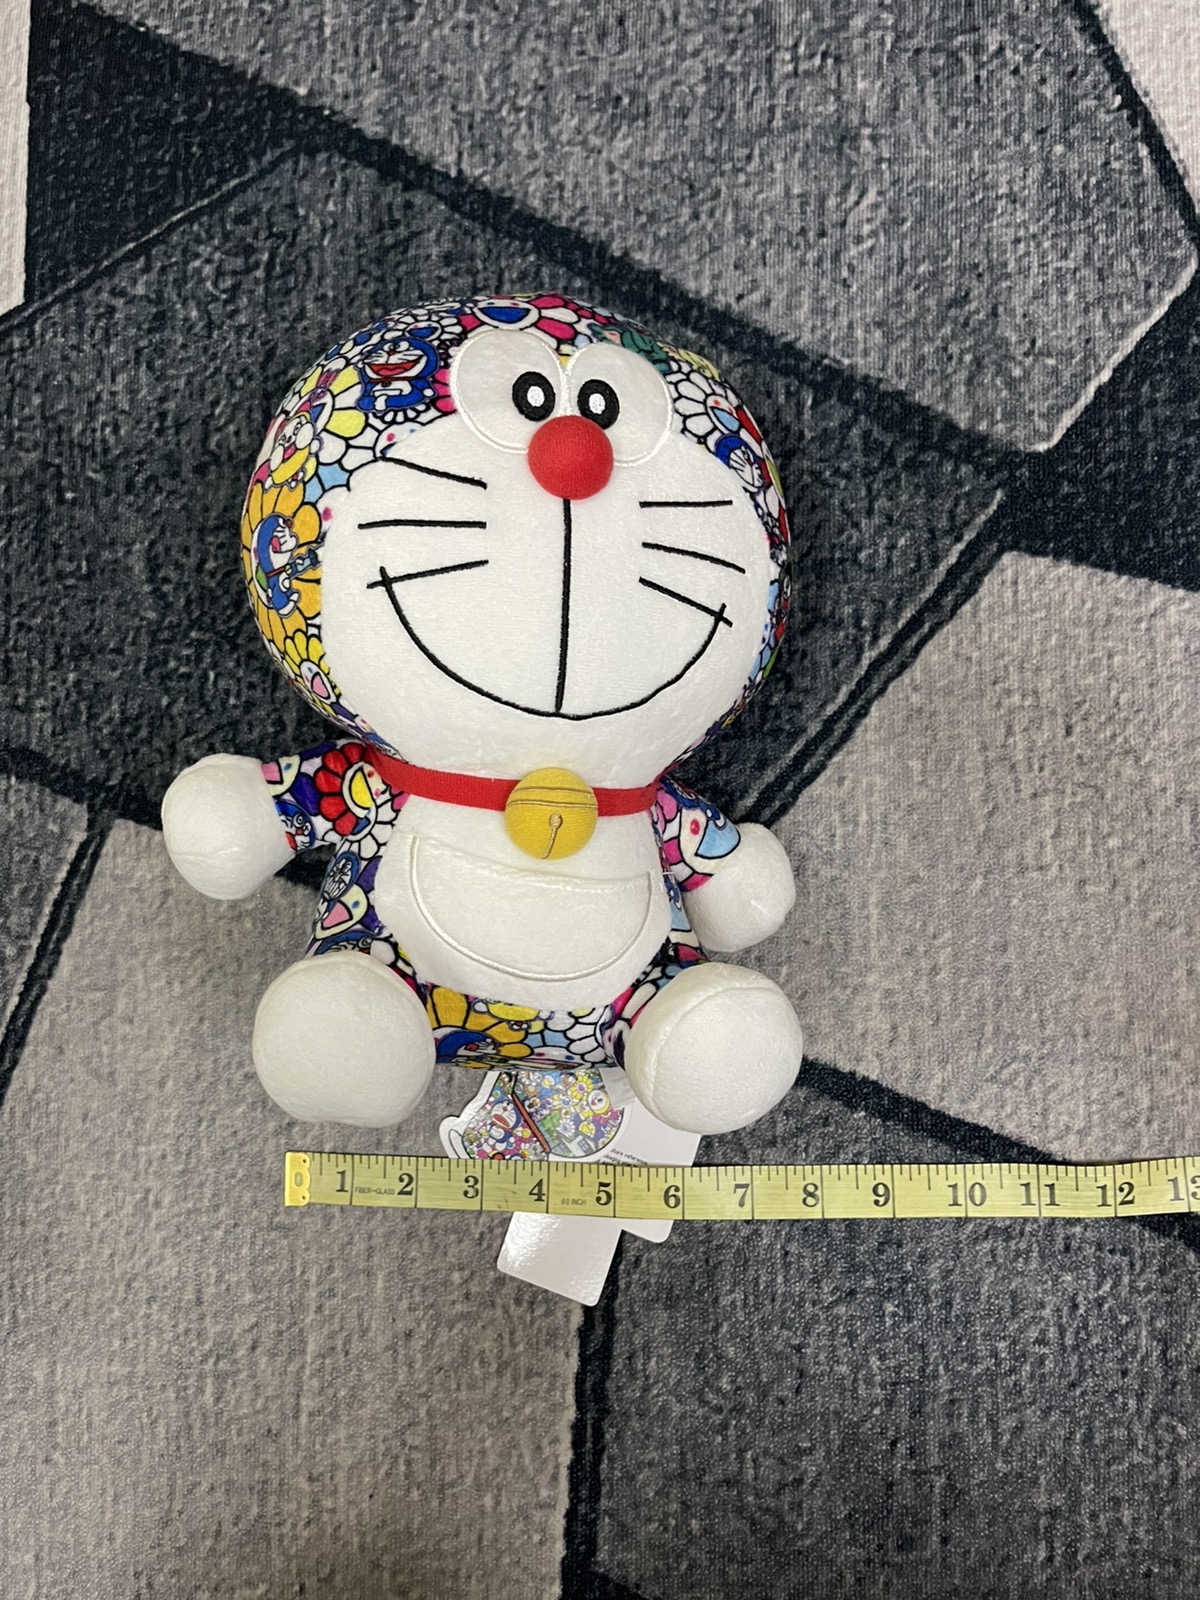 Issey Miyake - Rare Takashi Murakami Doraemon Toys Limited Edition - 4